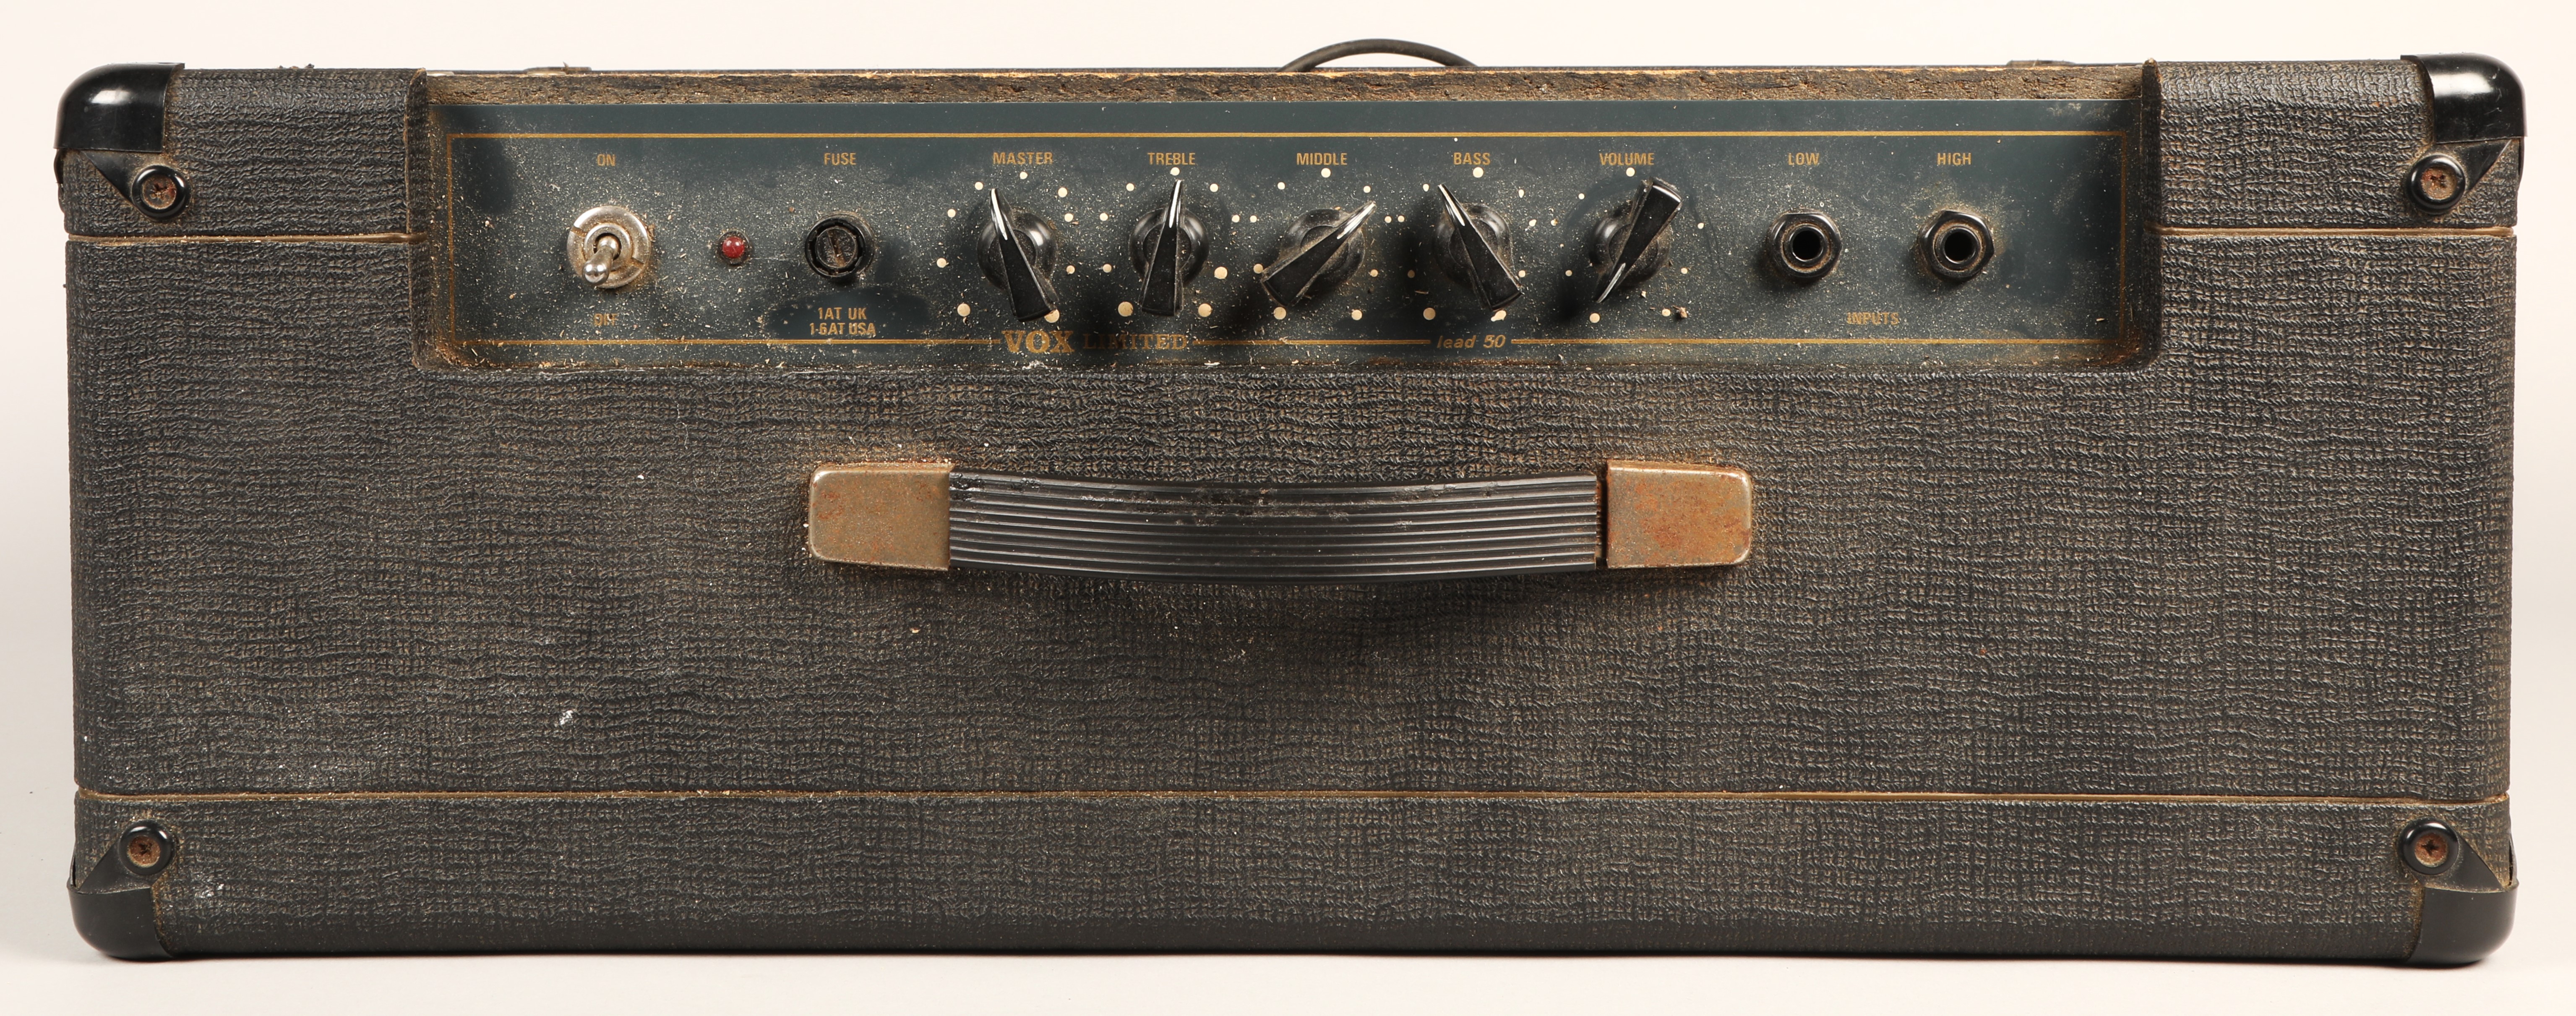 Vox Lead 50 amp, circa 1970, - Image 3 of 3